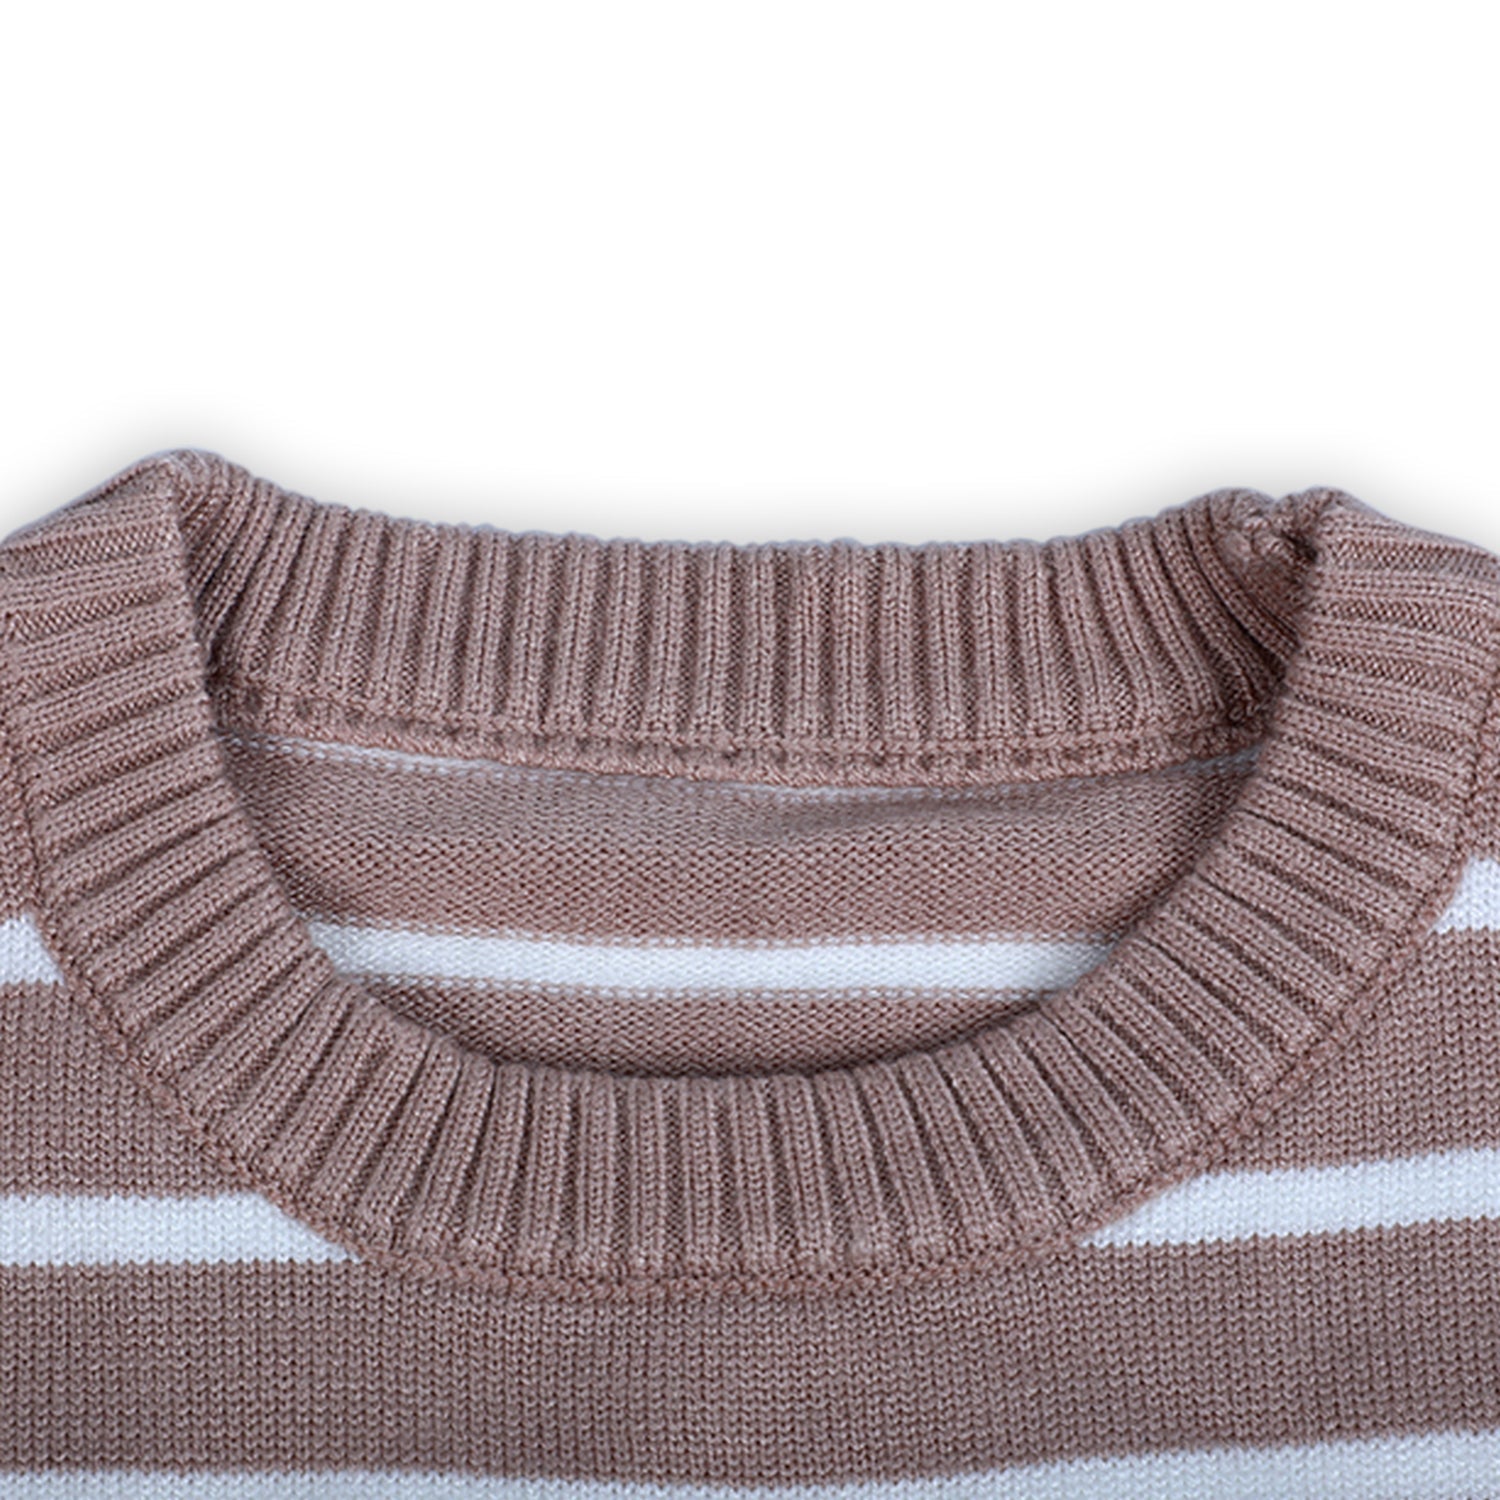 Dashing Dino Striped Premium Full Sleeves Knitted Sweater - Greyish Brown